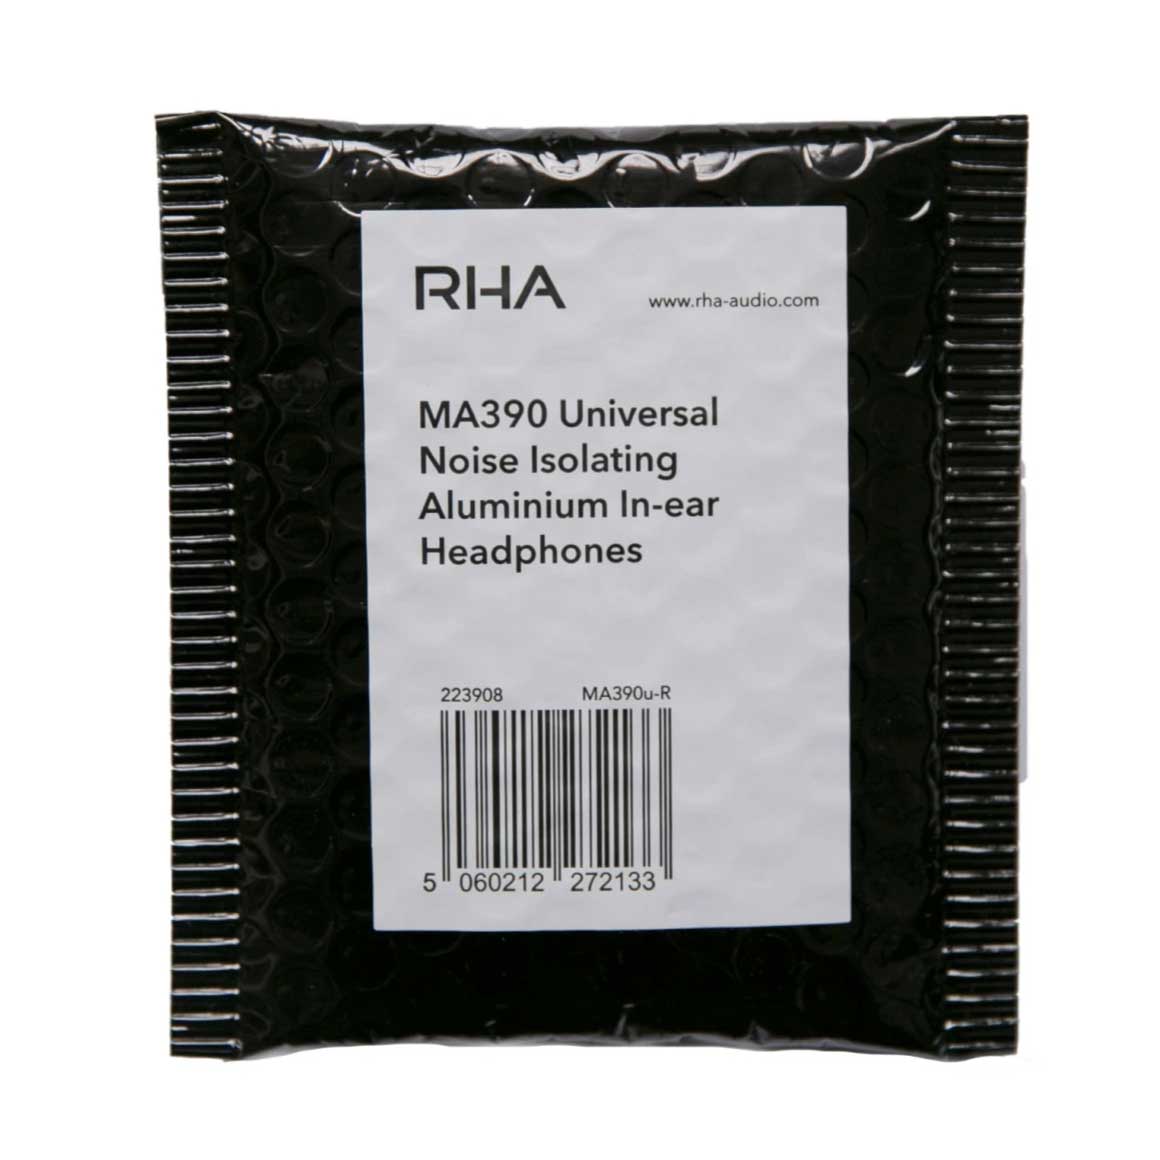 RHA - MA390 Universal